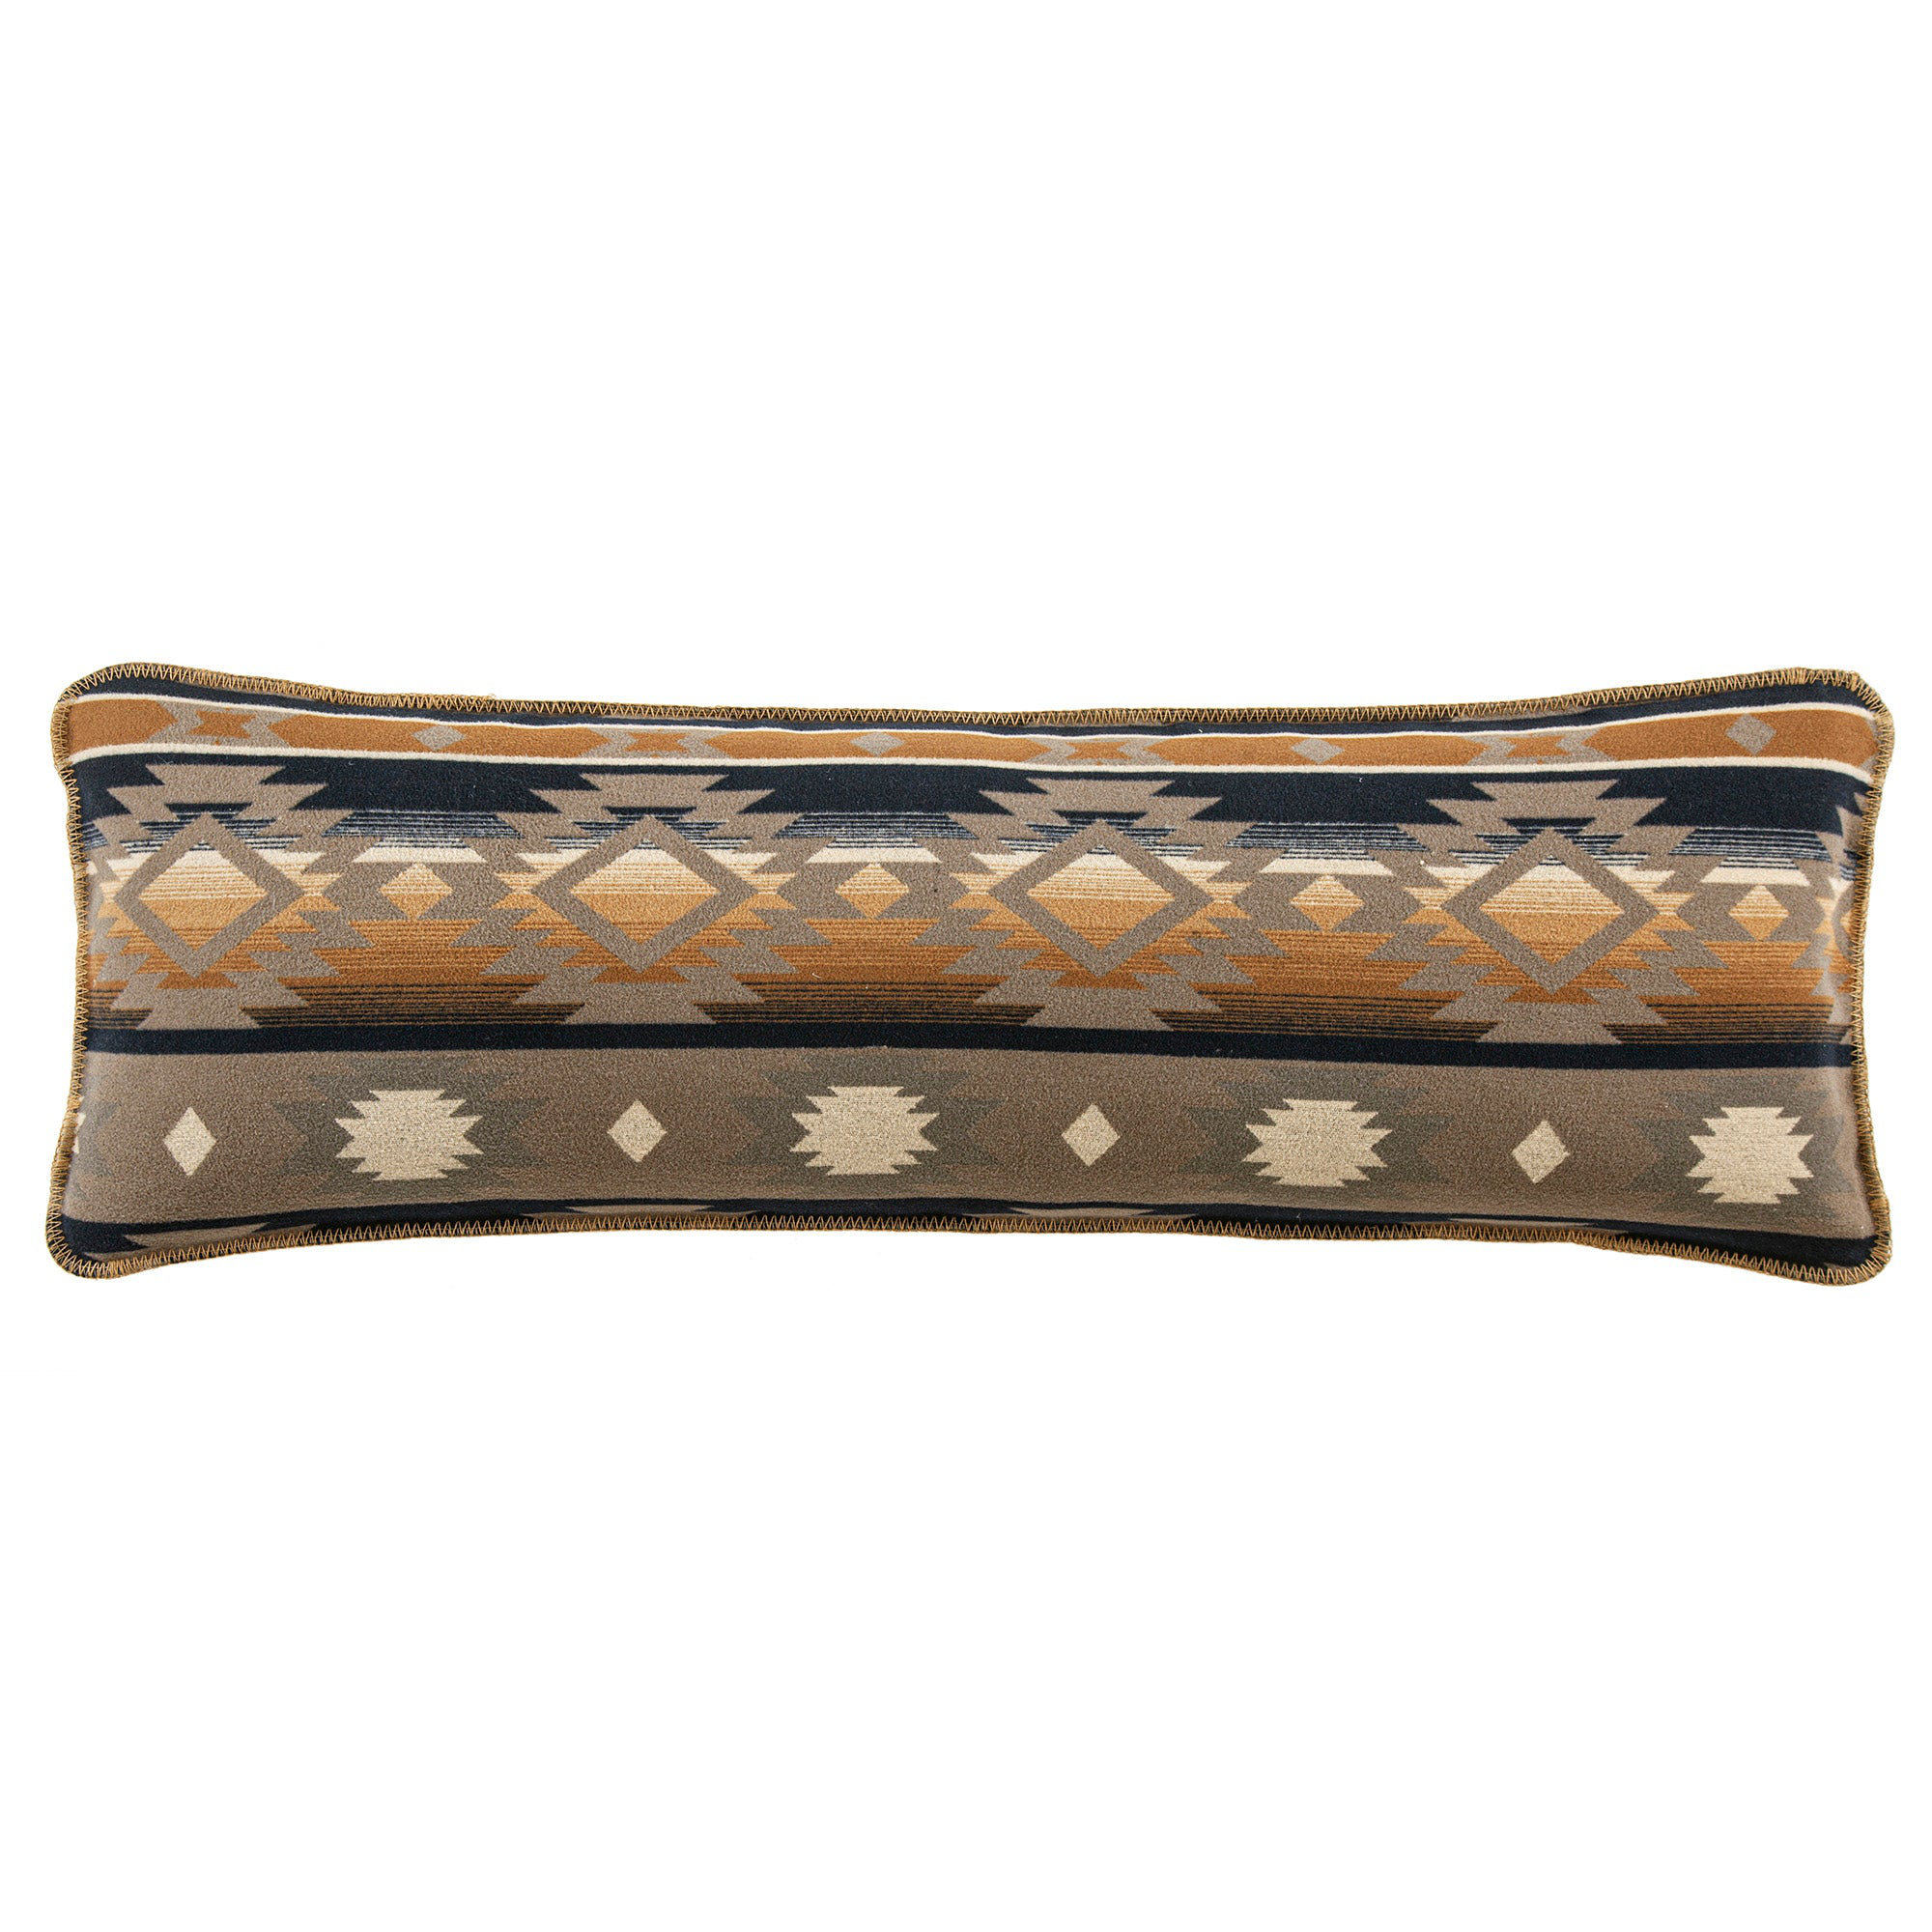 Foundry Select Jomanda Wool Blend Aztec Design Western Throw Pillow